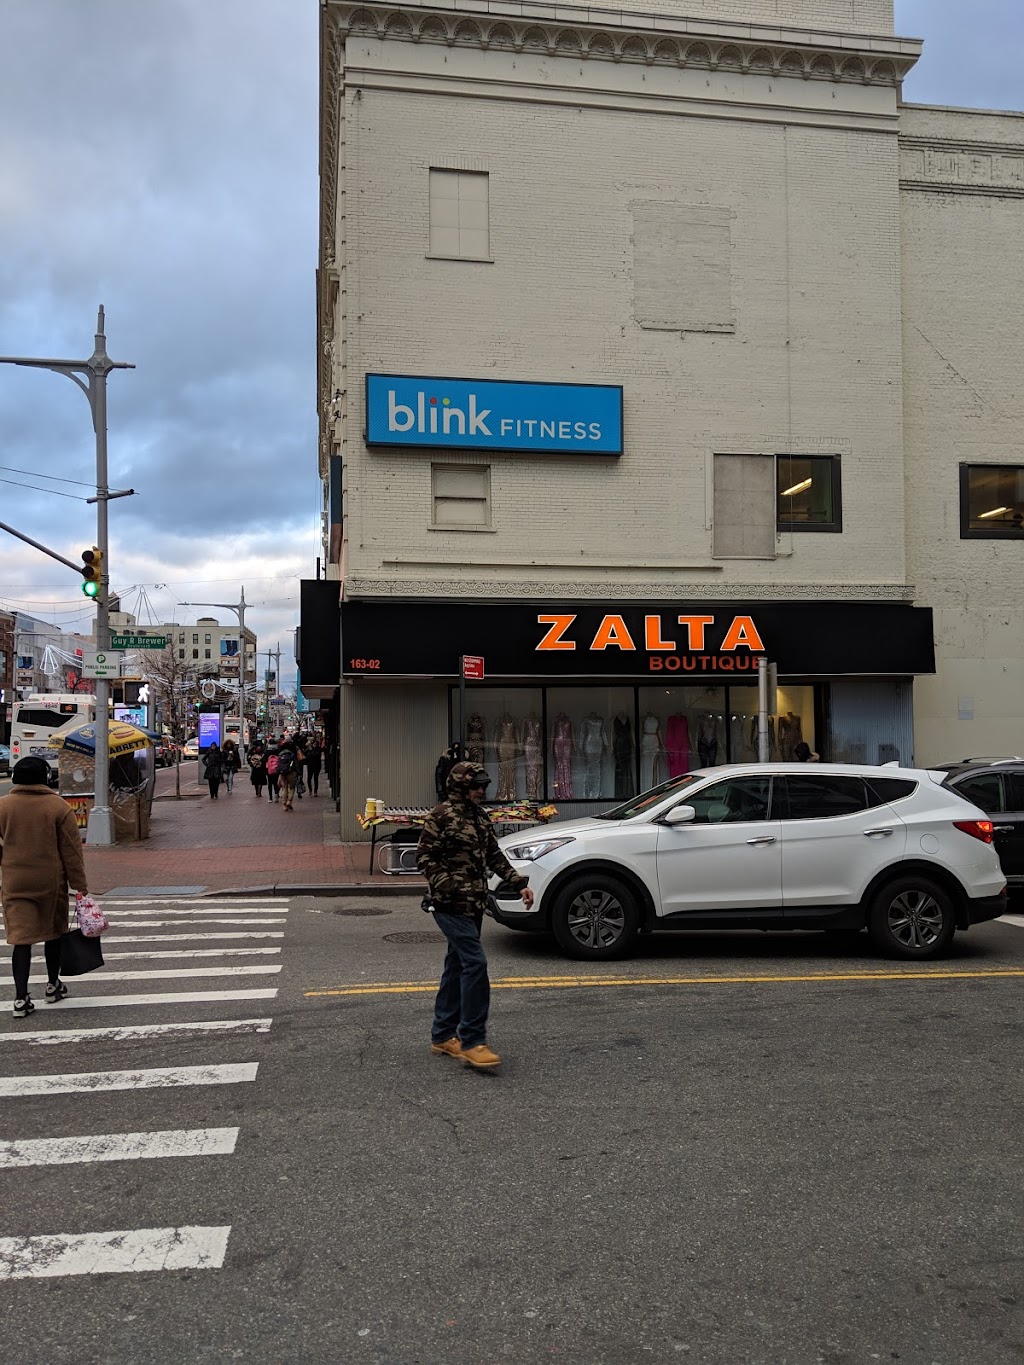 Zalta 2 Boutique | 163-02 Jamaica Ave, Queens, NY 11432 | Phone: (917) 863-9719